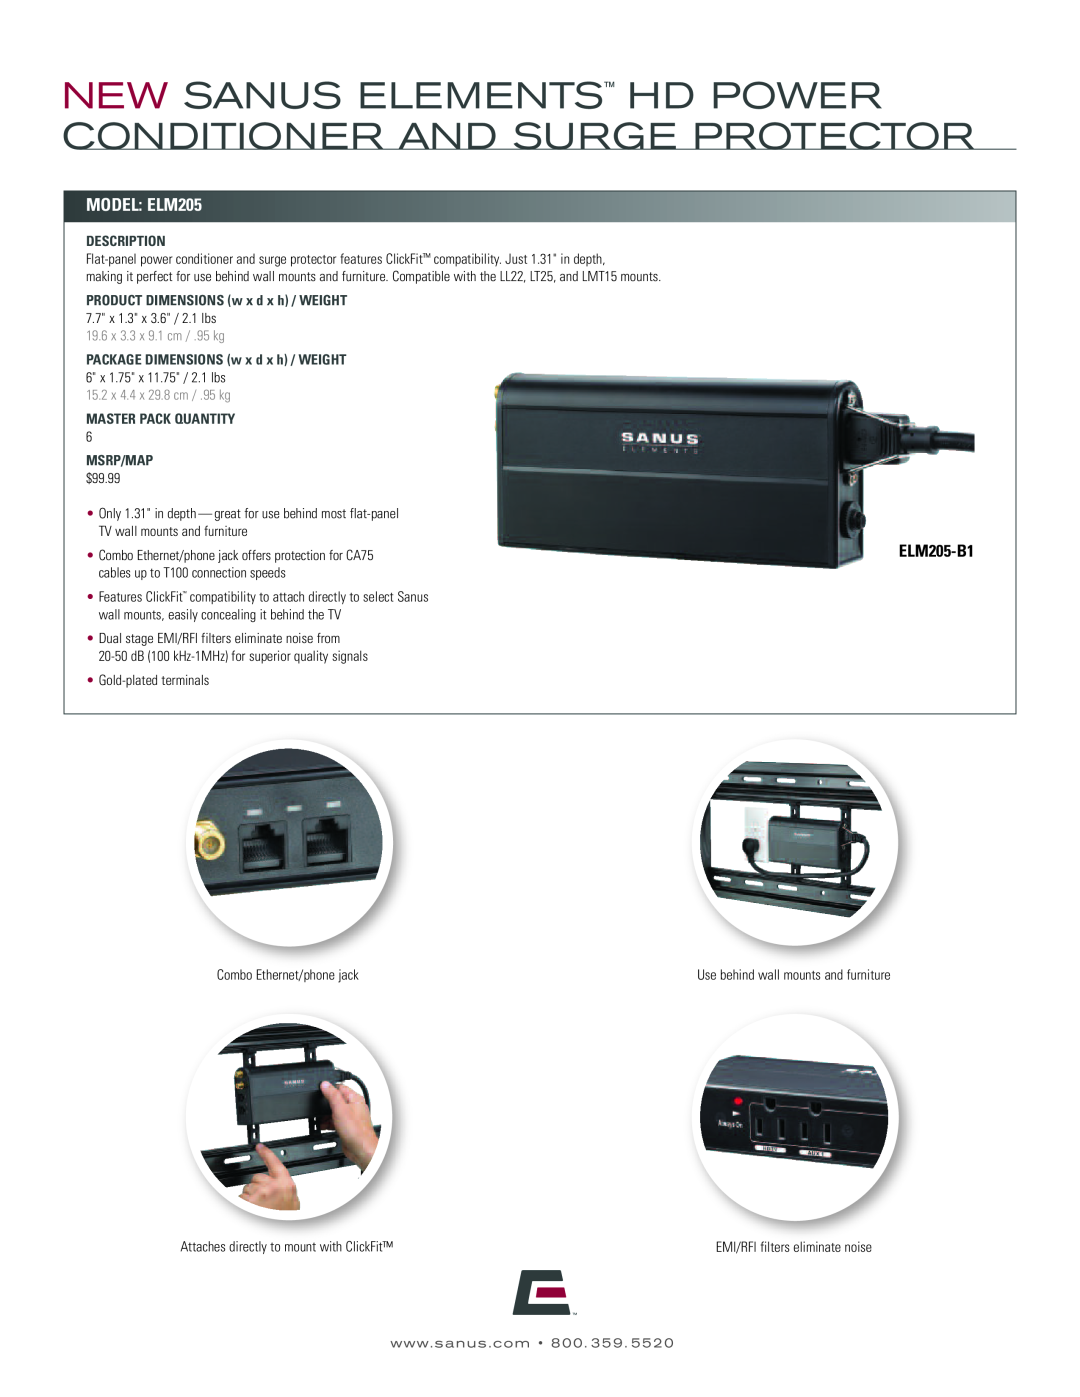 Sanus Systems ELM205-B1 New Sanus Elements Hd Power Conditioner And Surge Protector, MODEL ELM205, Description, Msrp/Map 